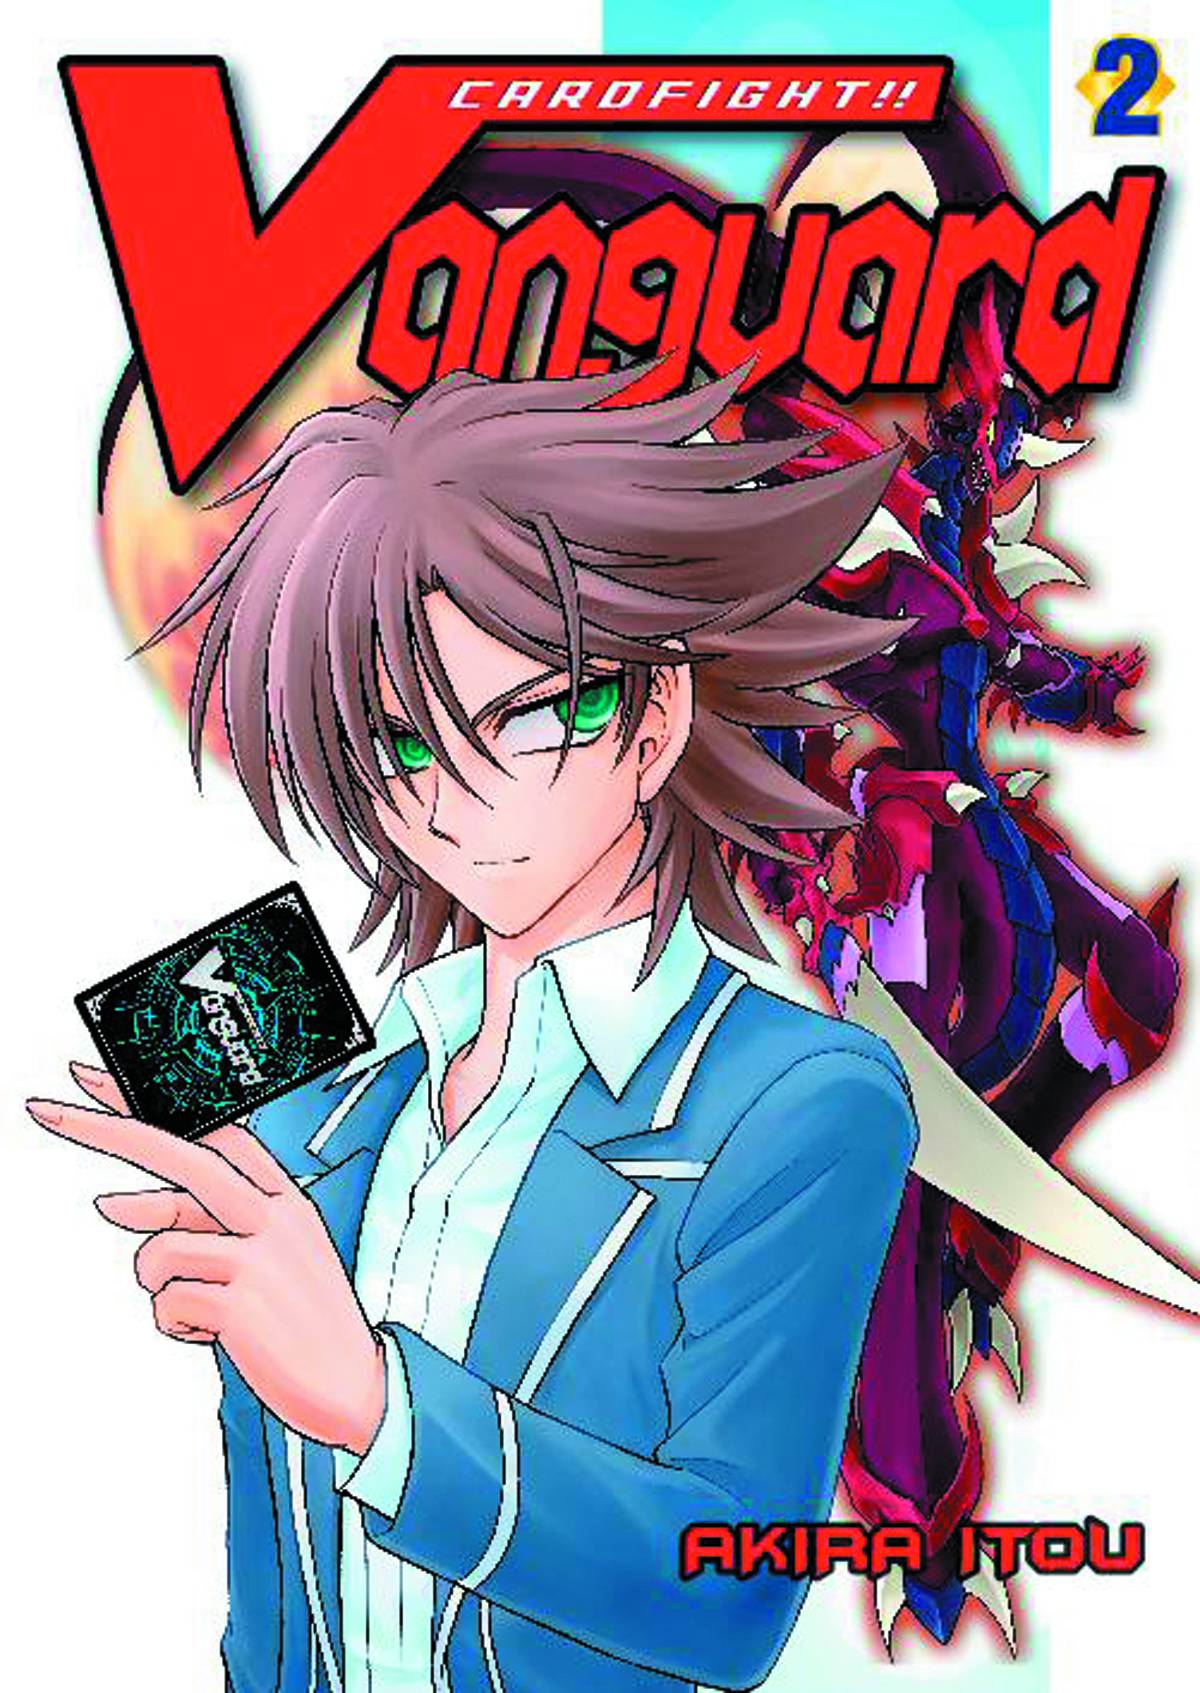 Cardfight Vanguard Manga Volume 2